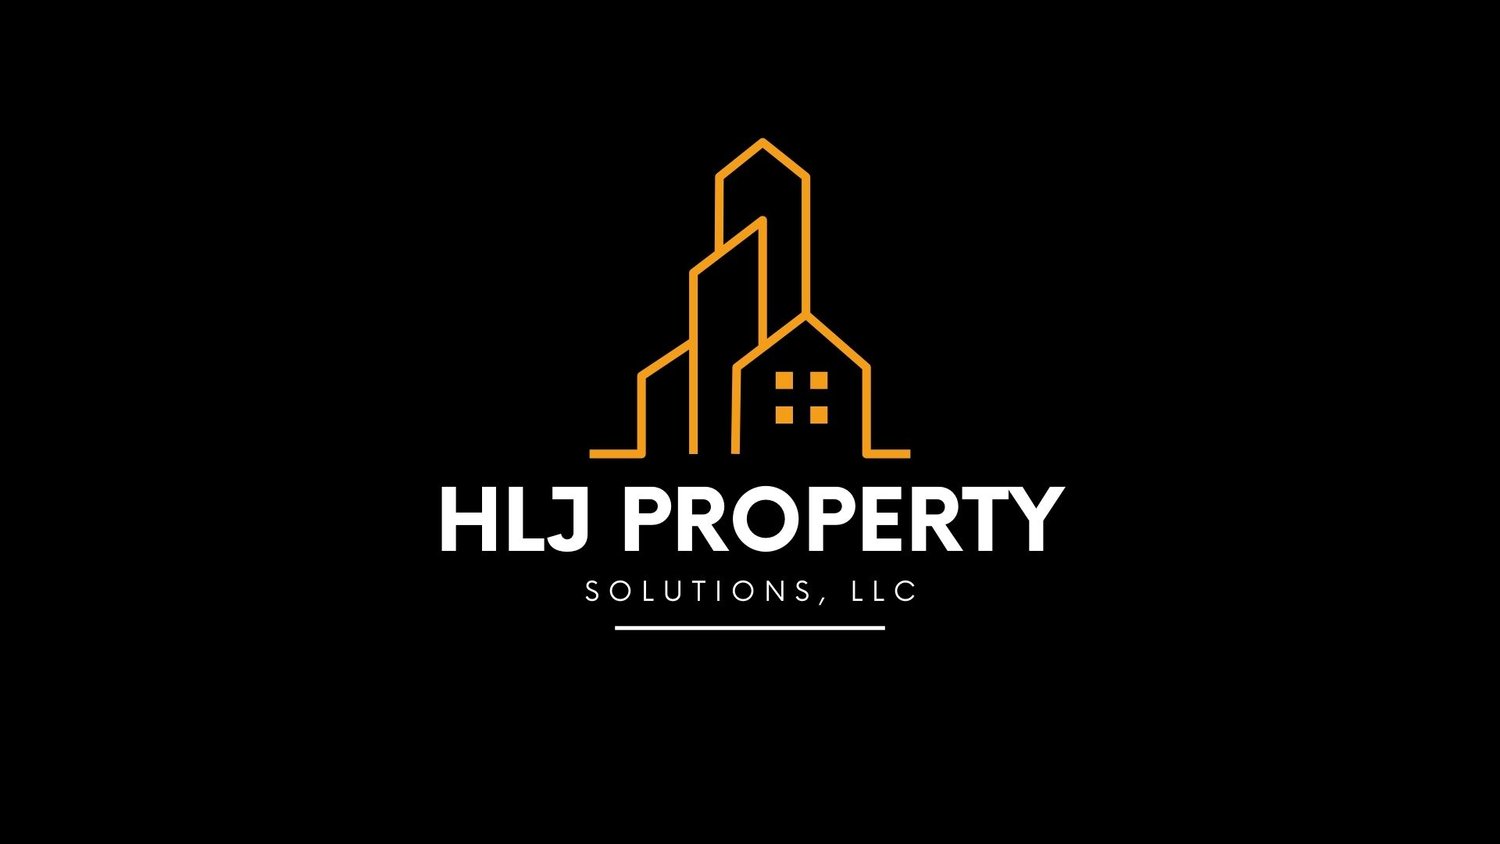 HLJ Property Solutions, LLC